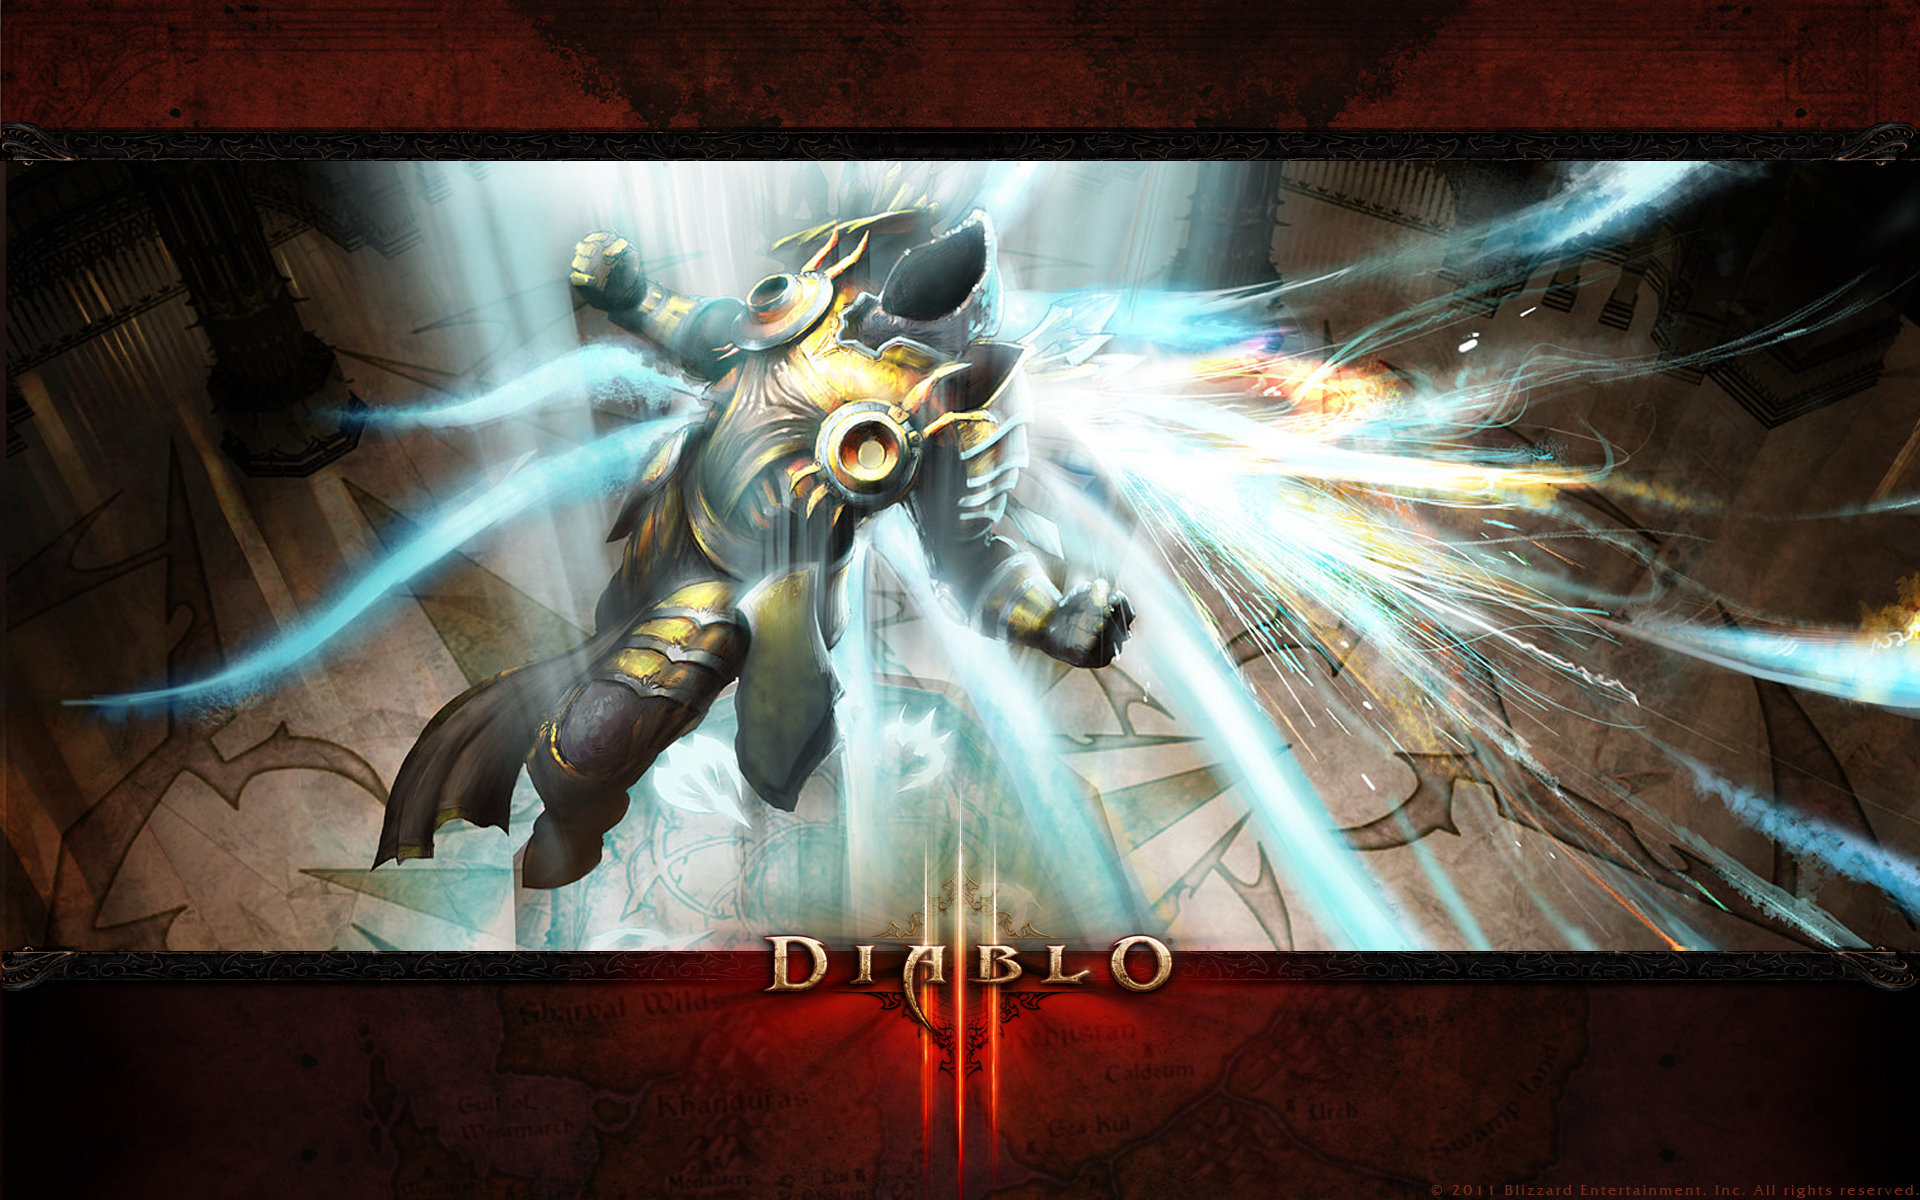 Tyrael Diablo 3 Wallpapers